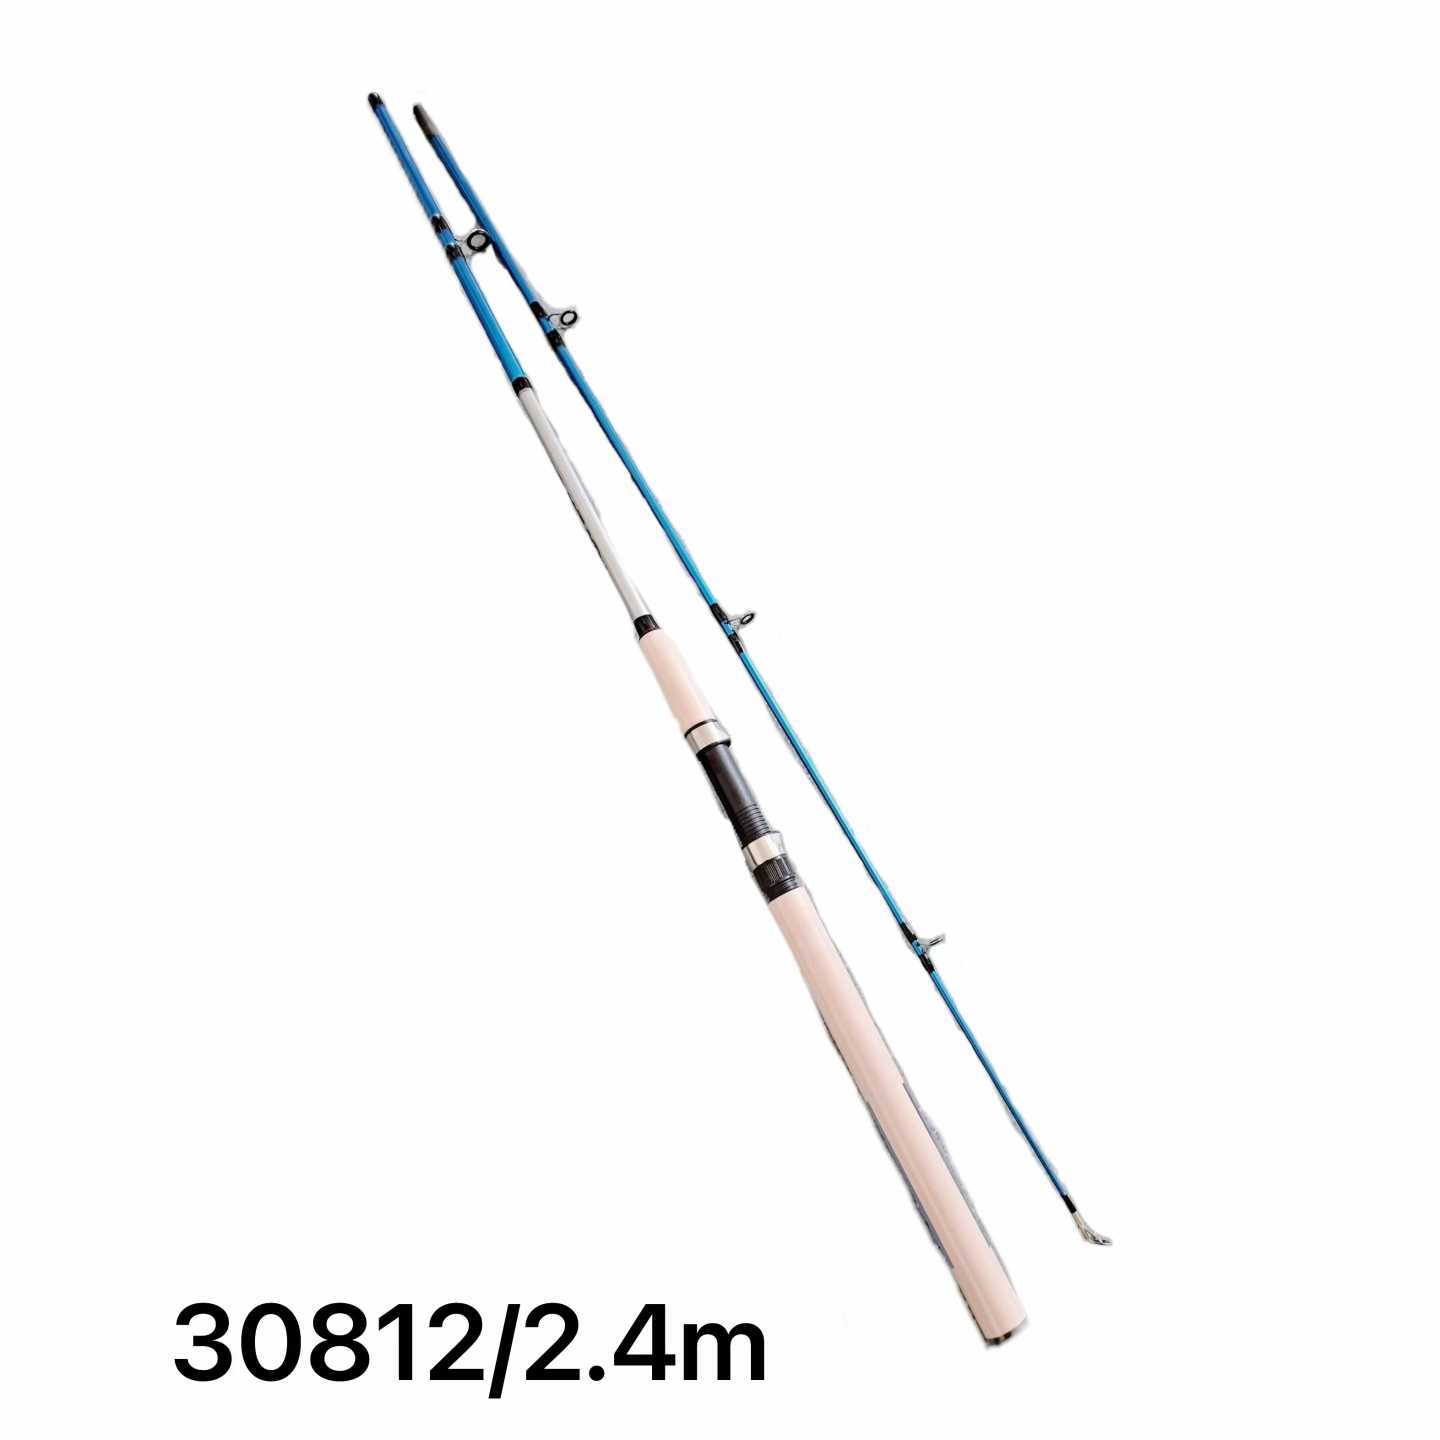 Fishing rod - Split - 2.4m - 30812